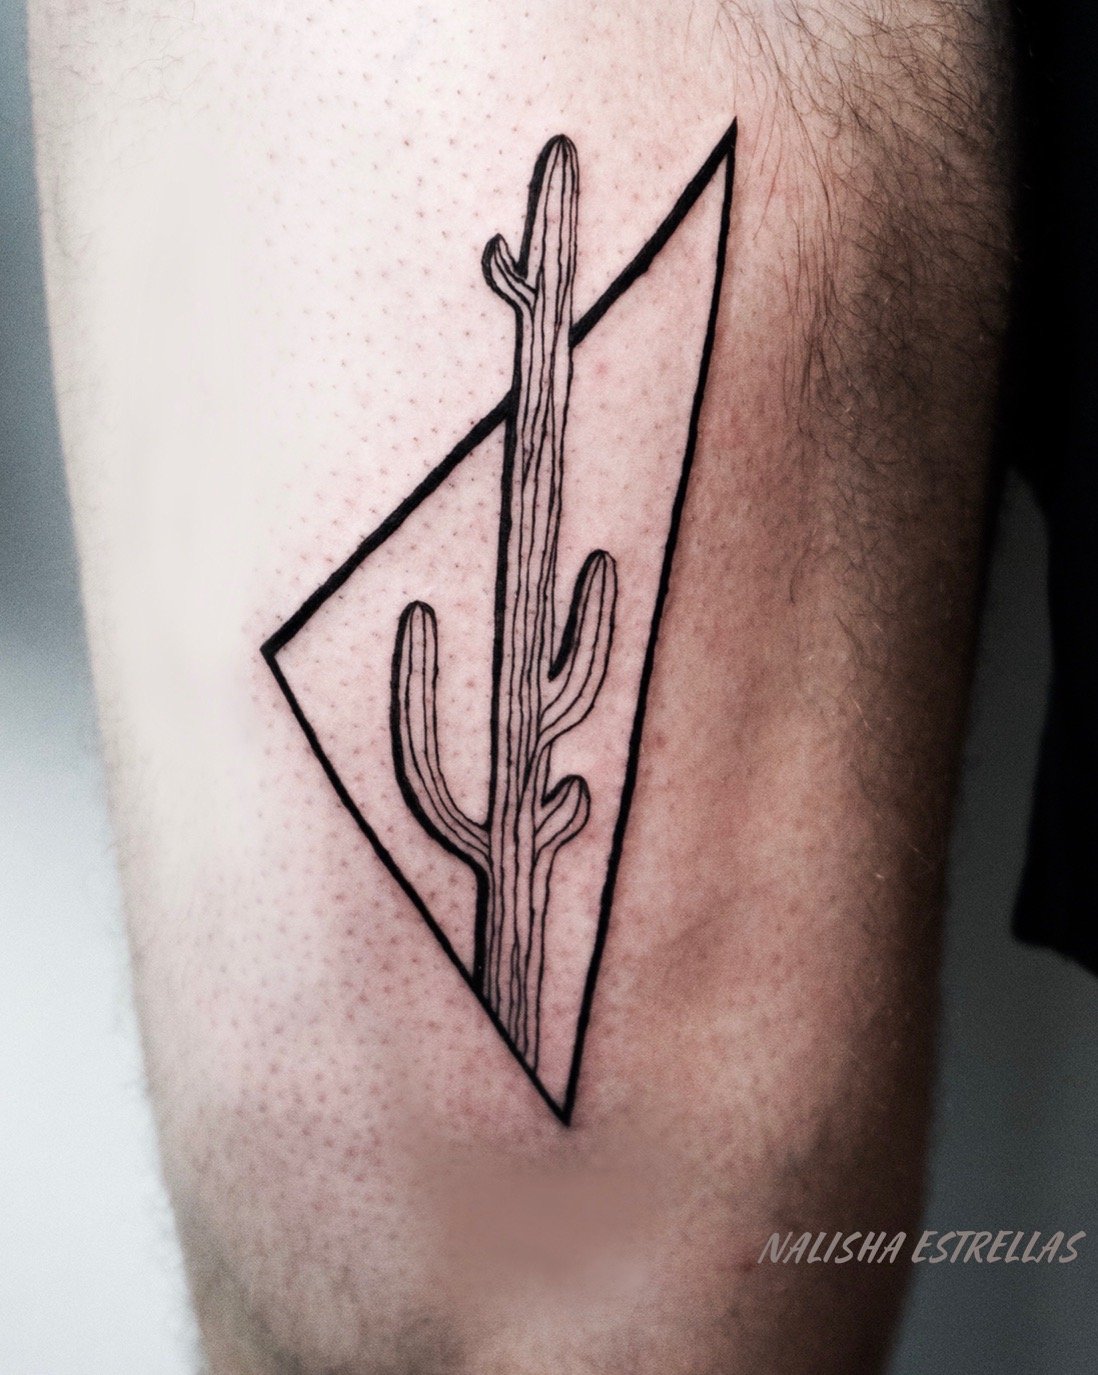 Nalisha Estrellas_tattoo_cactus.jpg